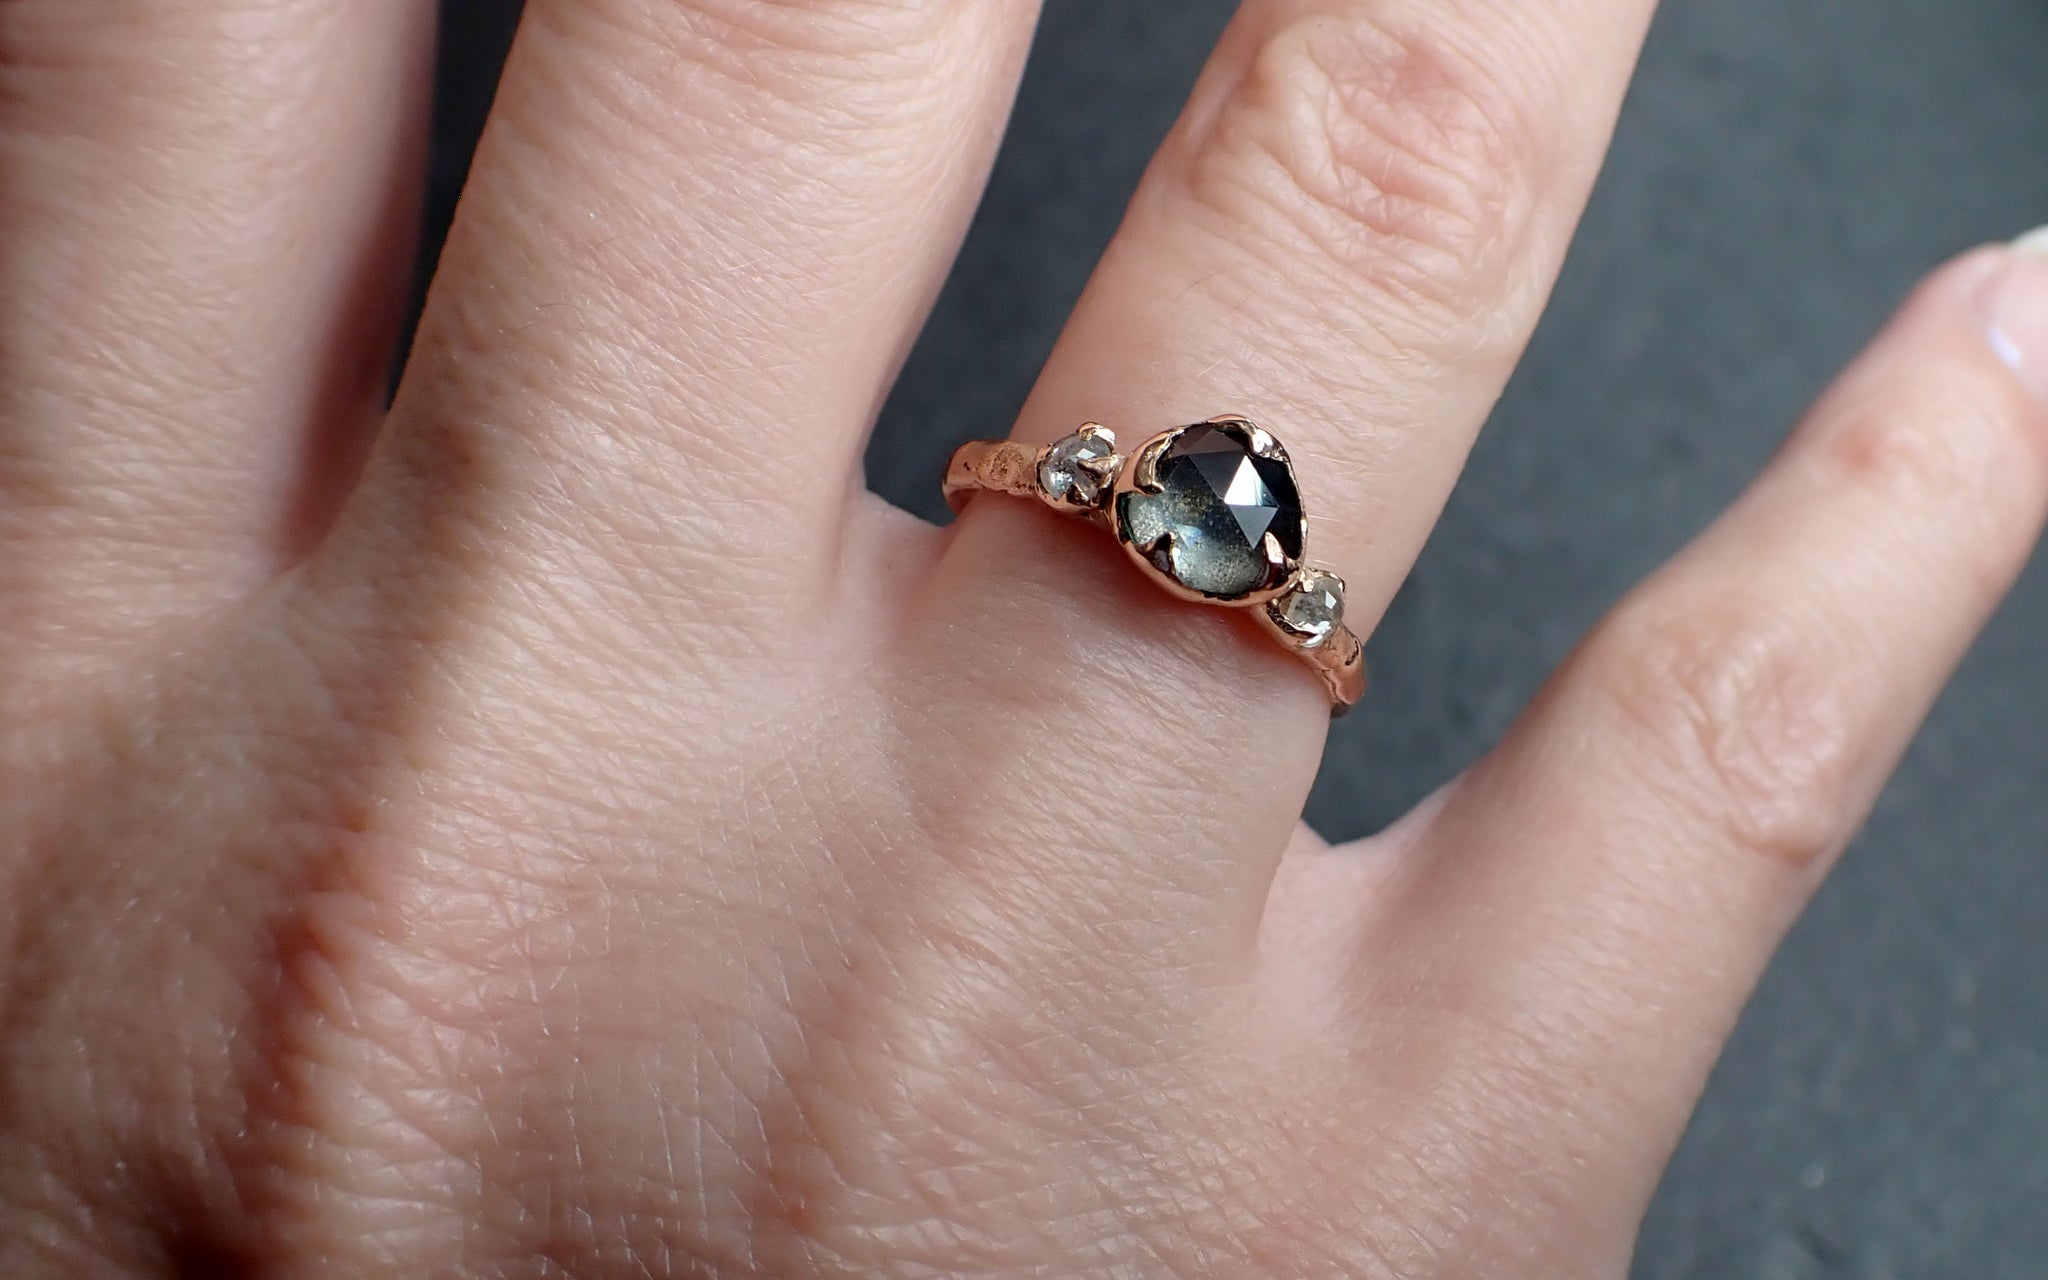 fancy cut blue montana sapphire and diamonds 14k rose gold engagement wedding ring custom gemstone ring multi stone ring 2741 Alternative Engagement